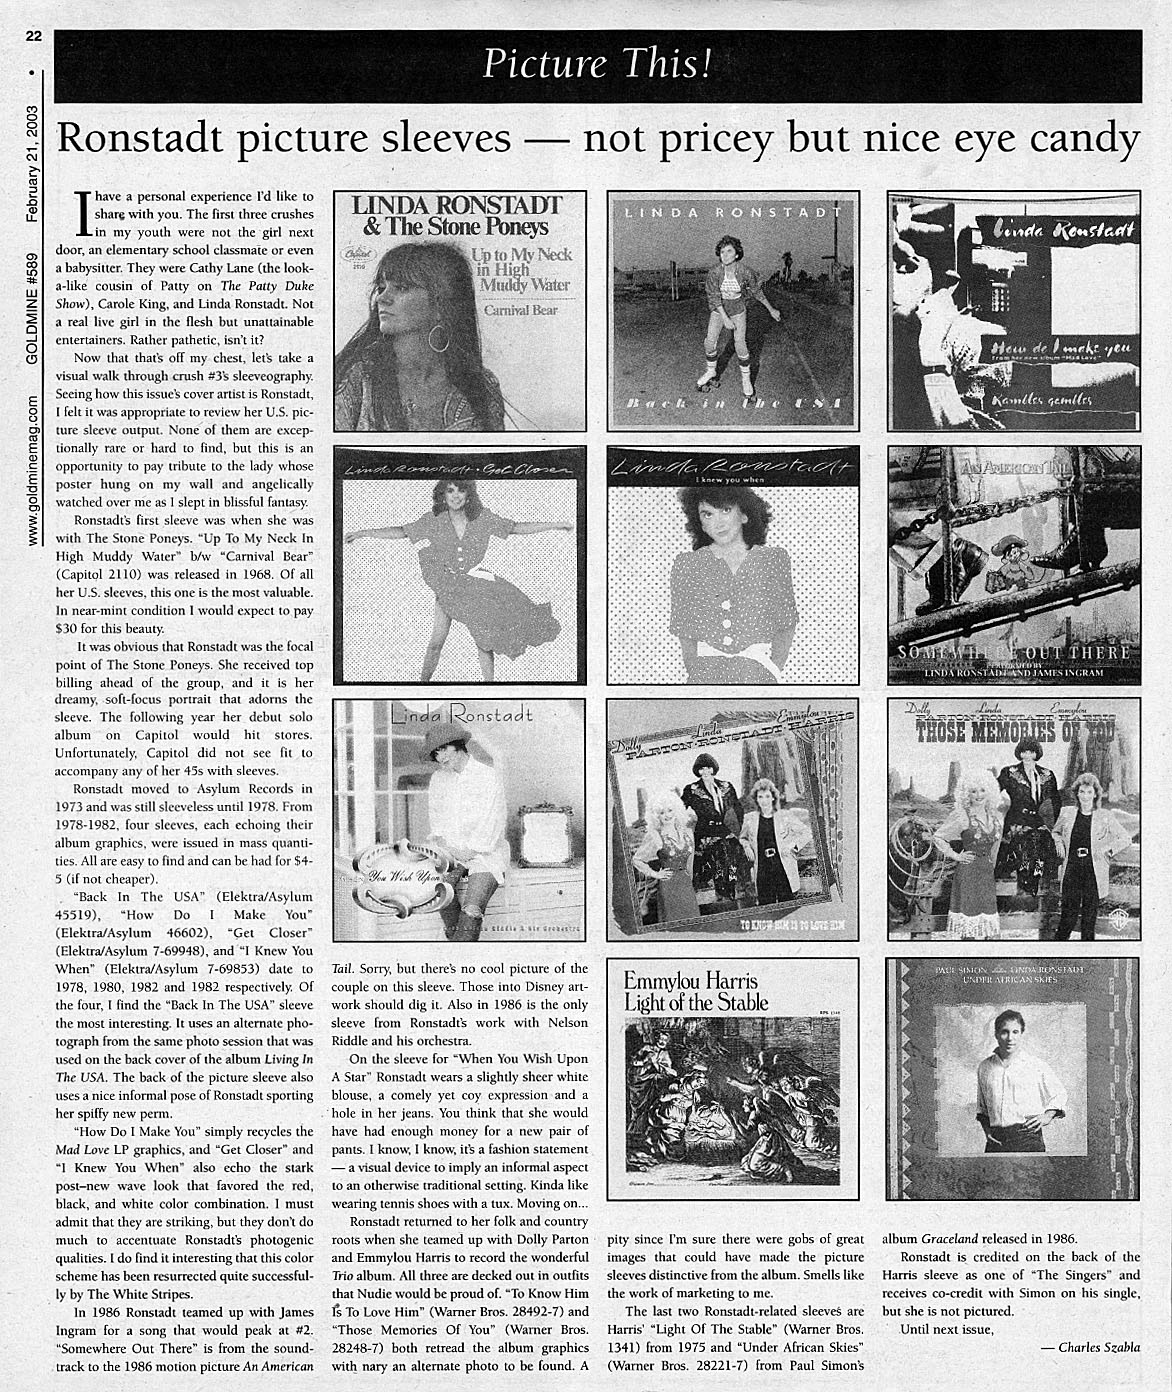 Linda Ronstadt Goldmine article + discography 2003